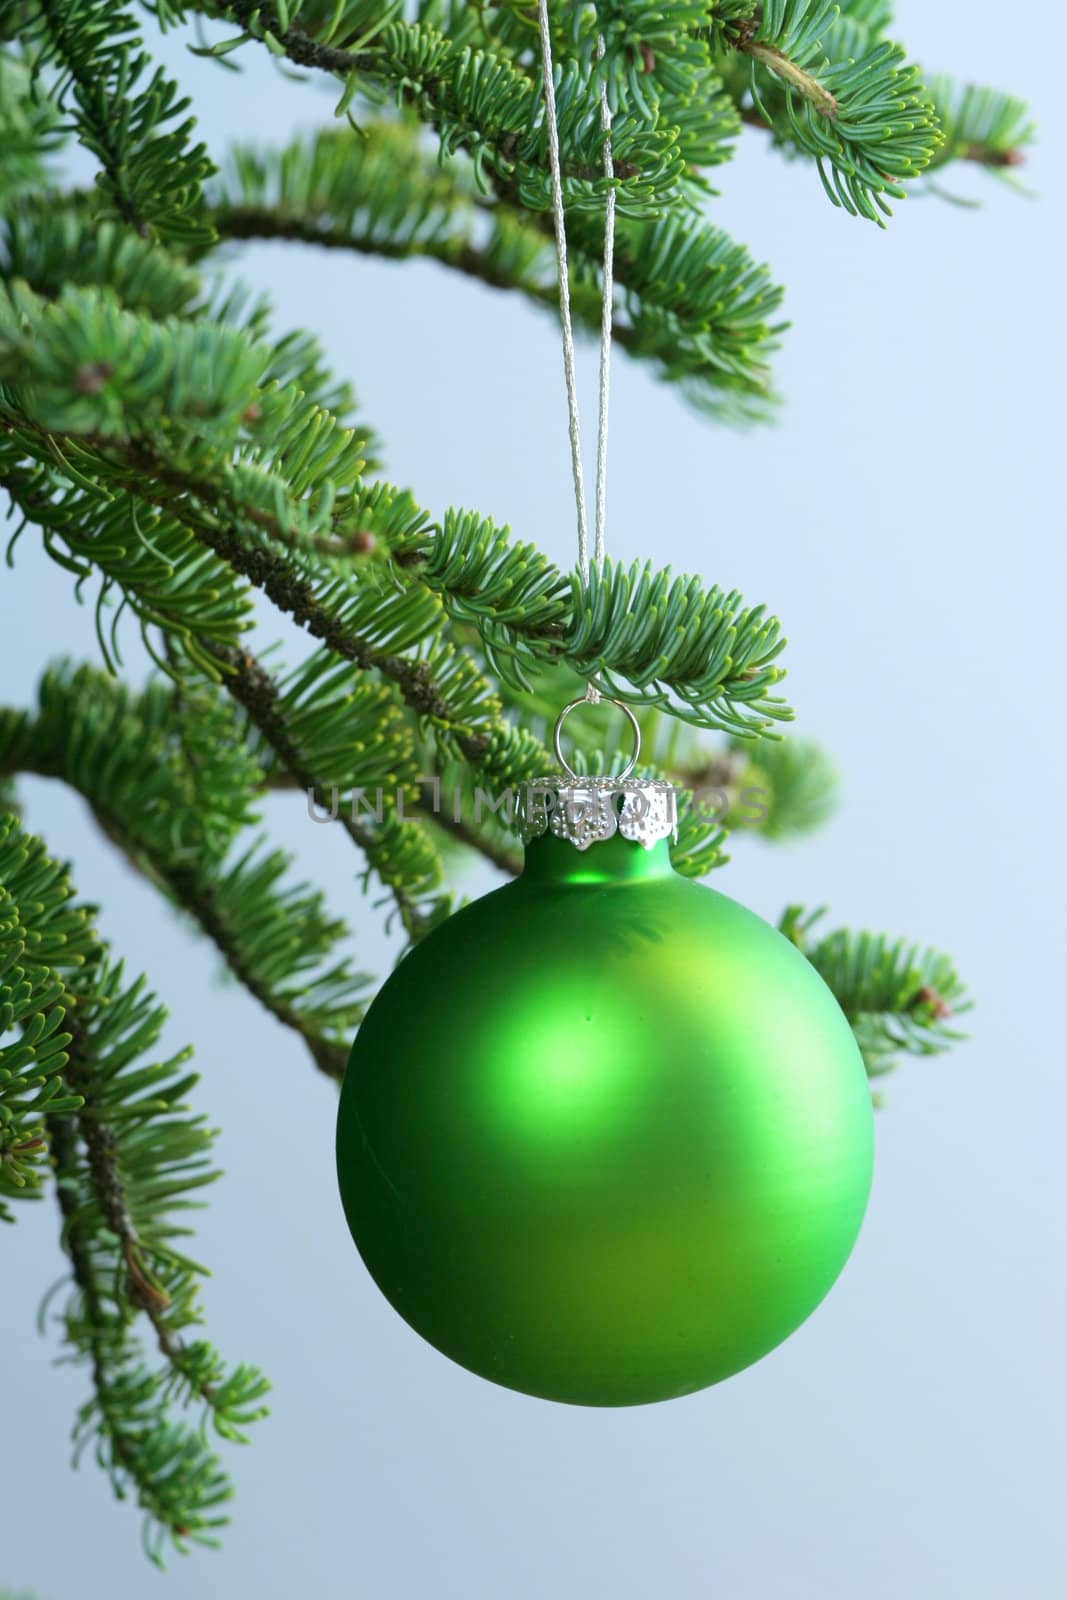 Green ornament hanging on Christmas tree.